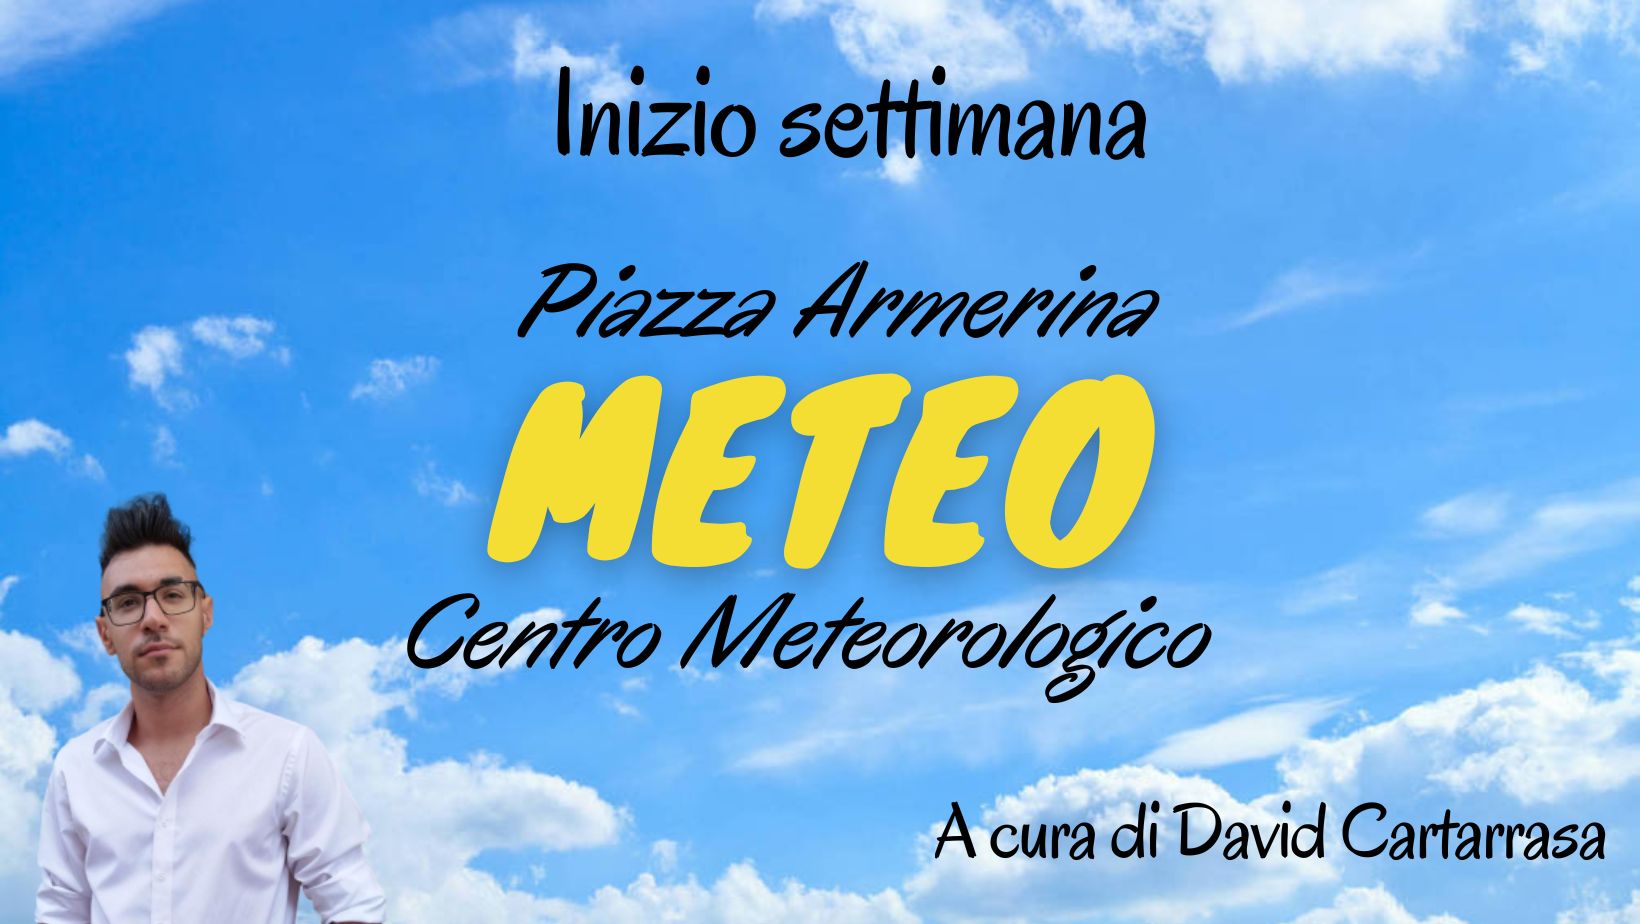 Meteo Piazza Armerina: instabilità nelle ore pomeridiane, da mercoledì rialzo termico